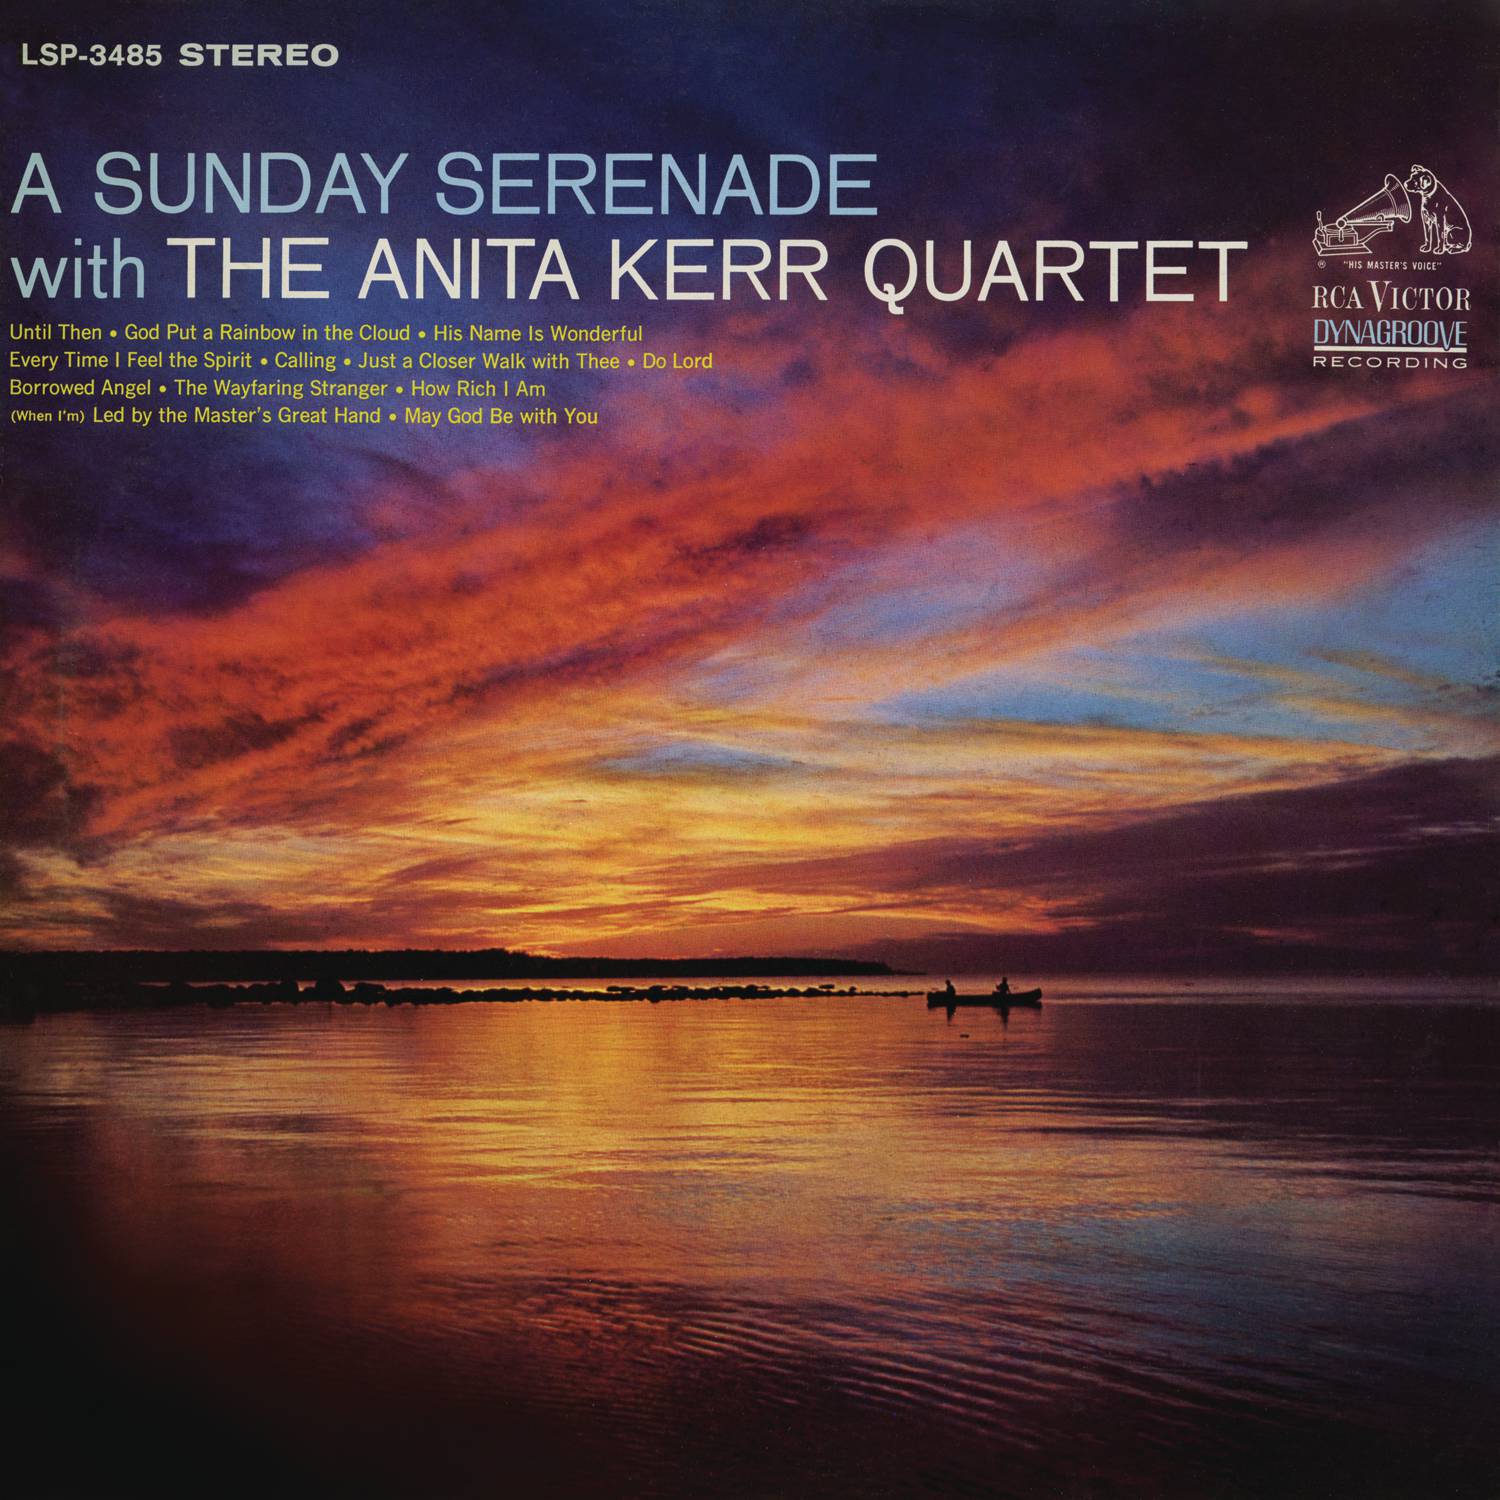 Anita Kerr Quartet – A Sunday Serenade (1966/2015) [AcousticSounds FLAC 24bit/96kHz]